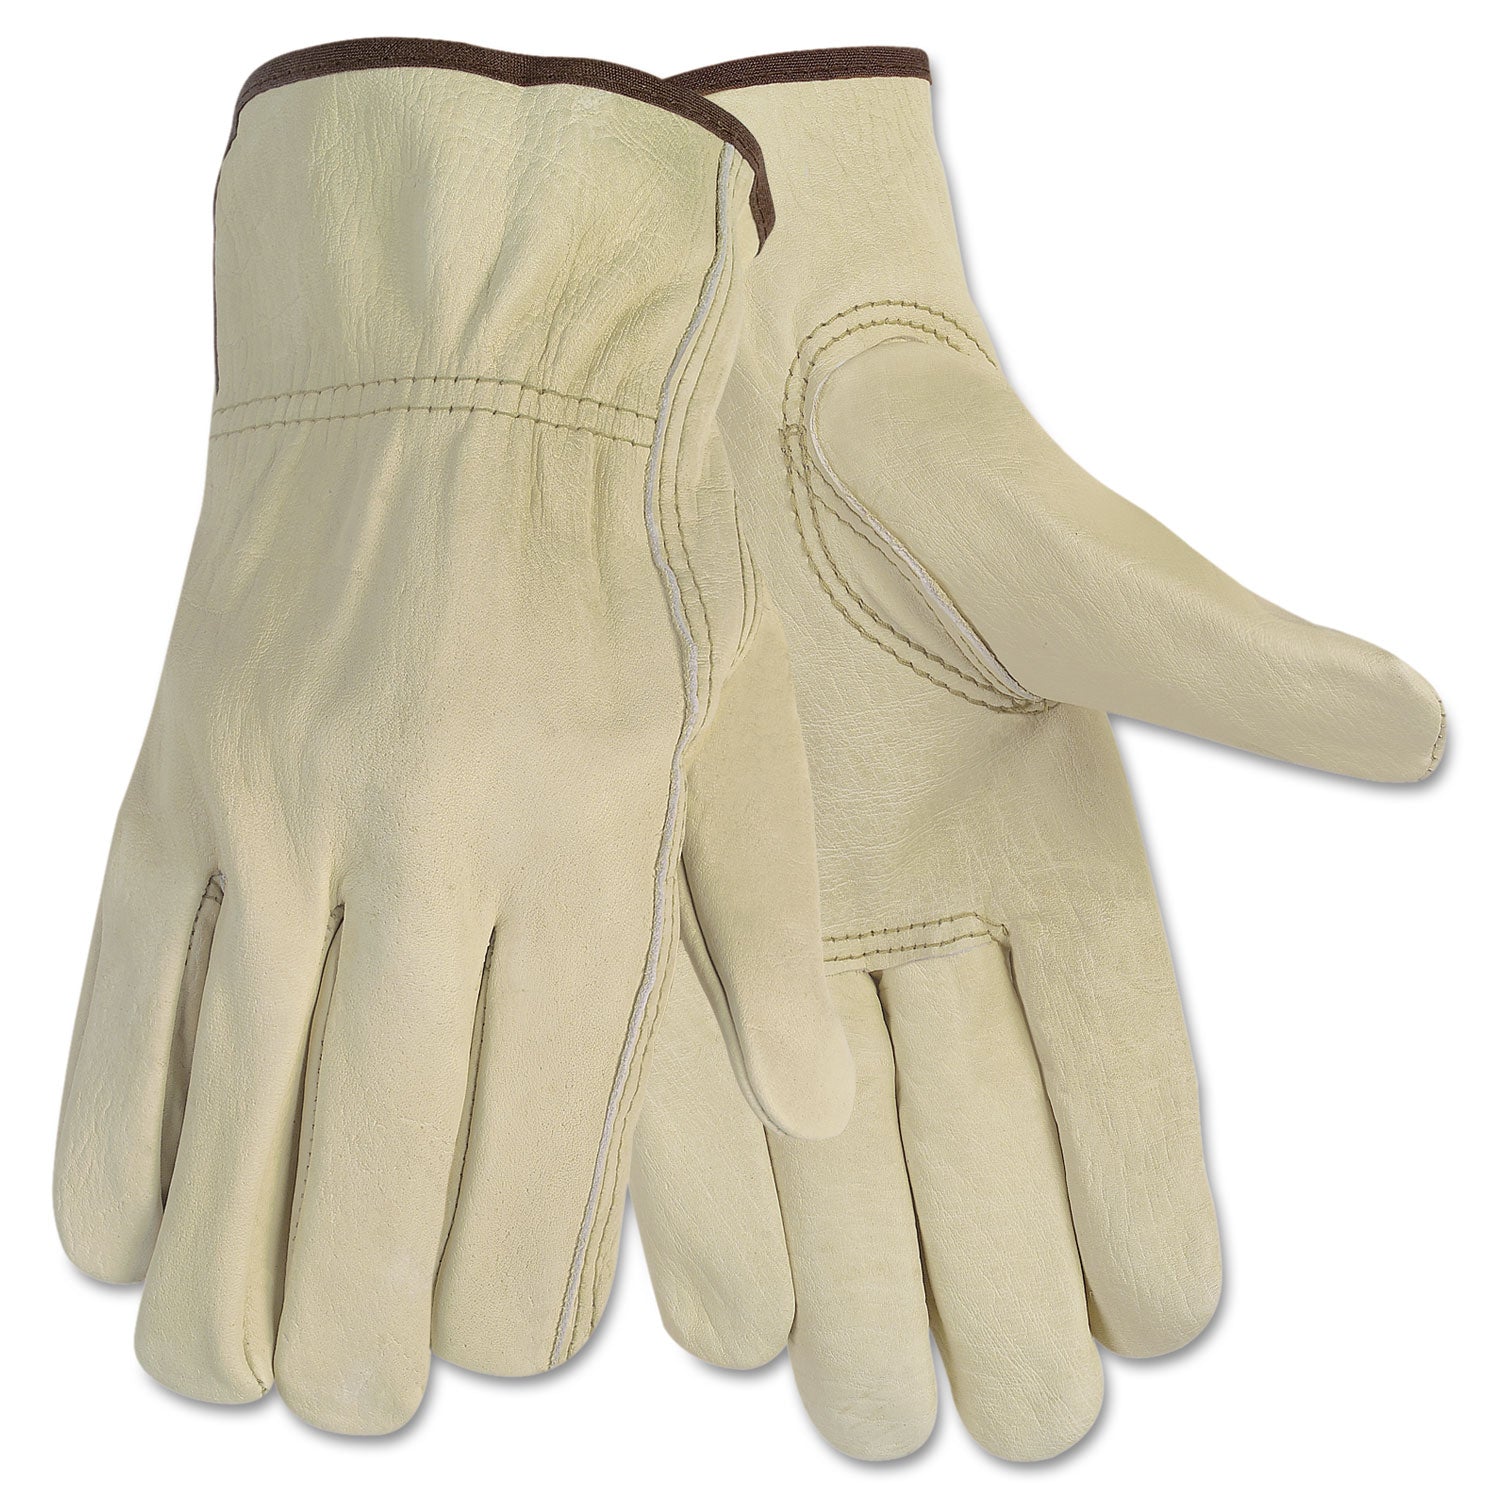 Economy Leather Driver Gloves, Medium, Beige, Pair - 